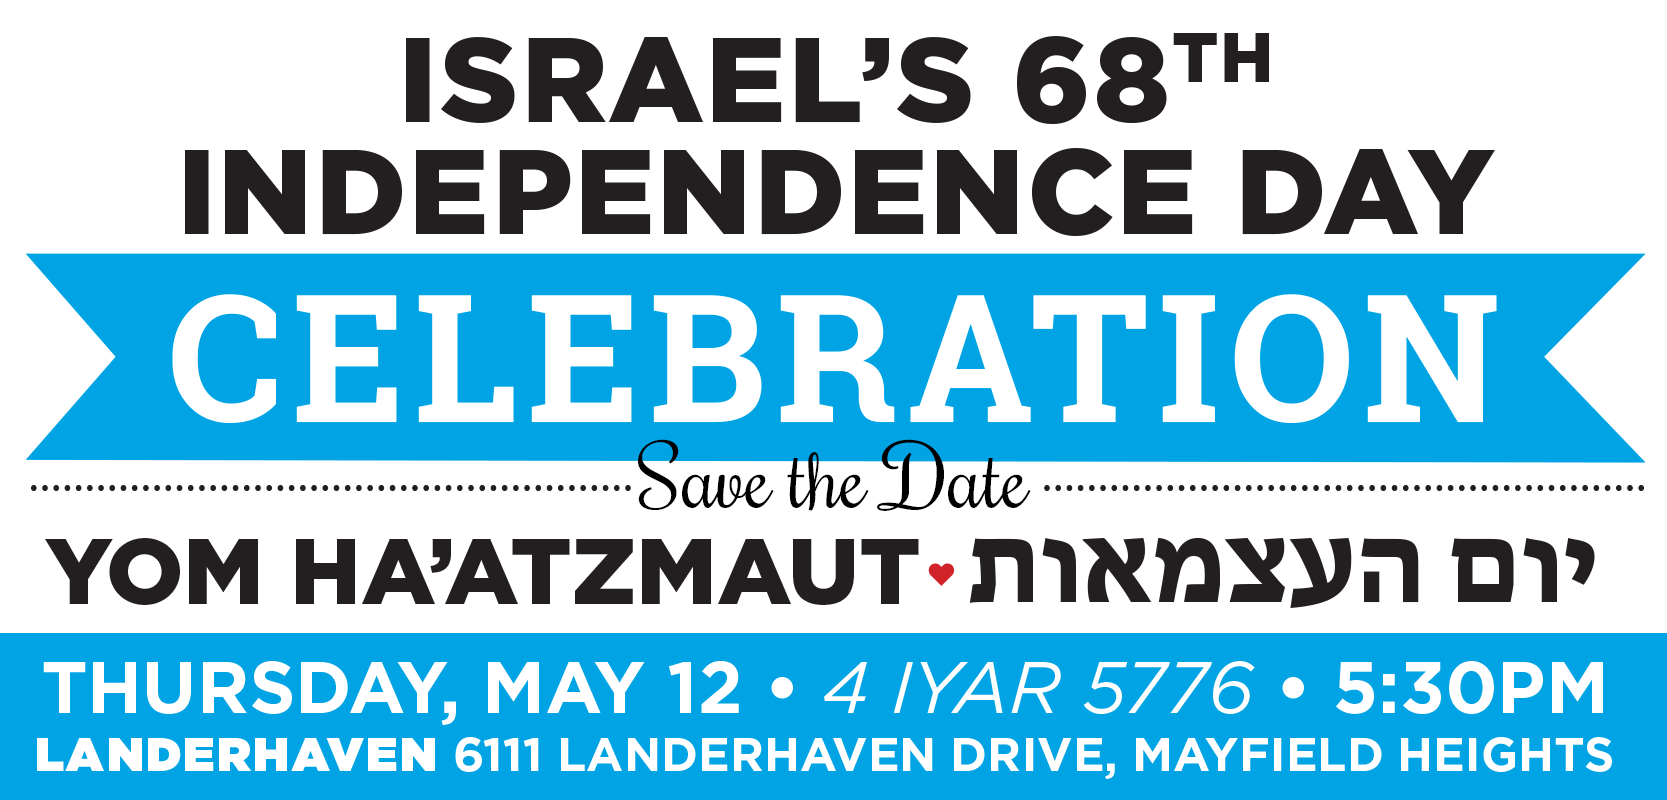 Israel's Independence Day Celebration